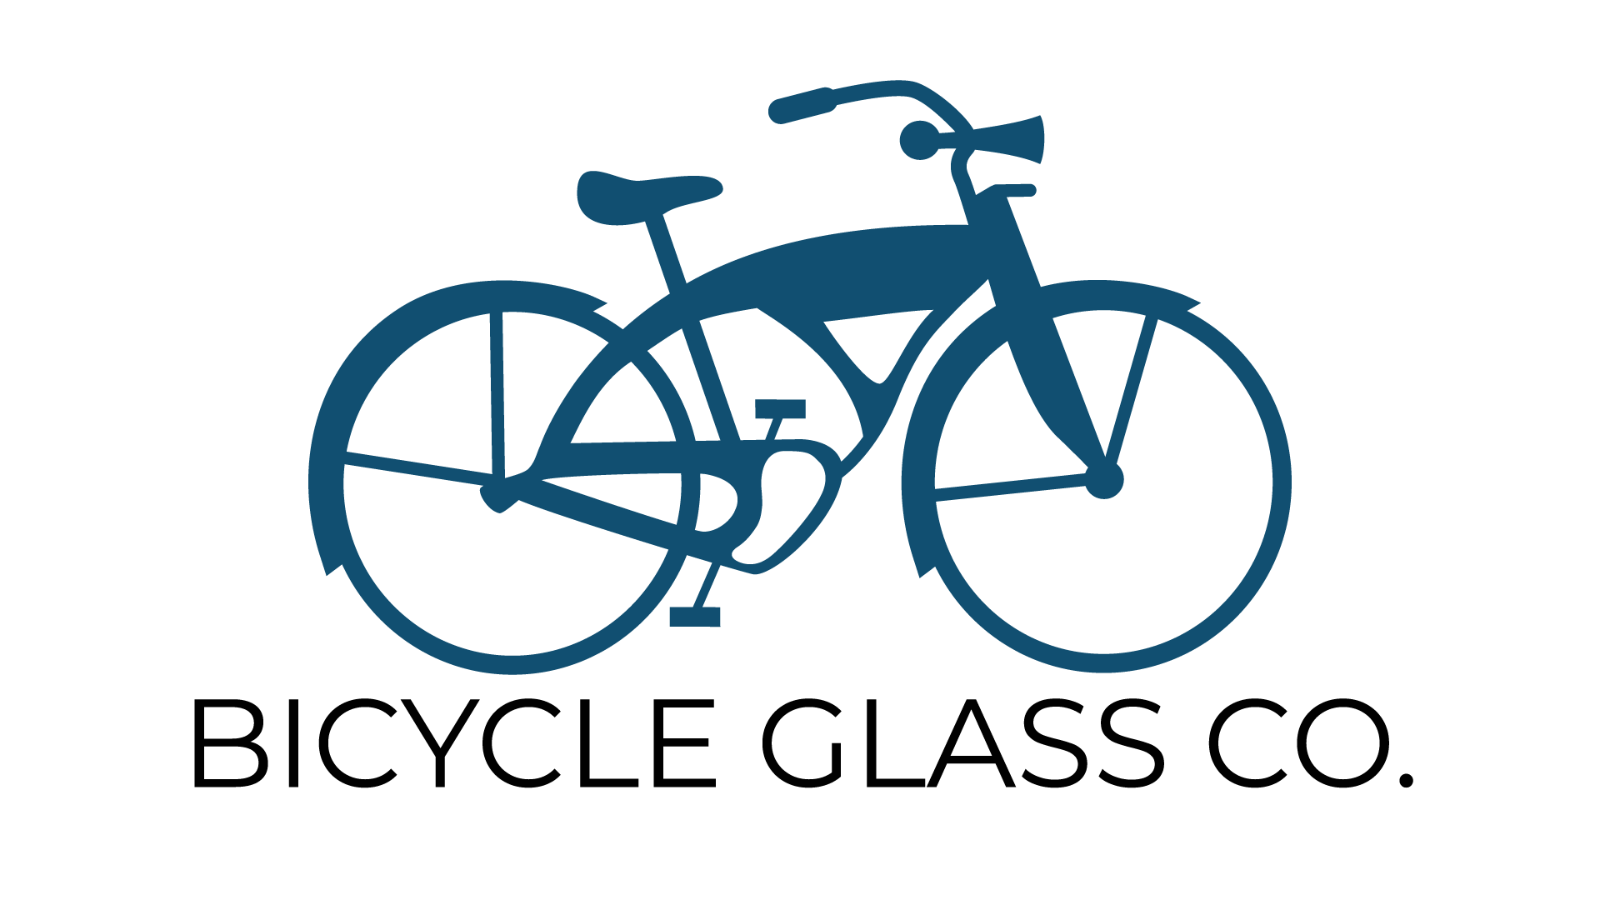 Bicycle Glass logo